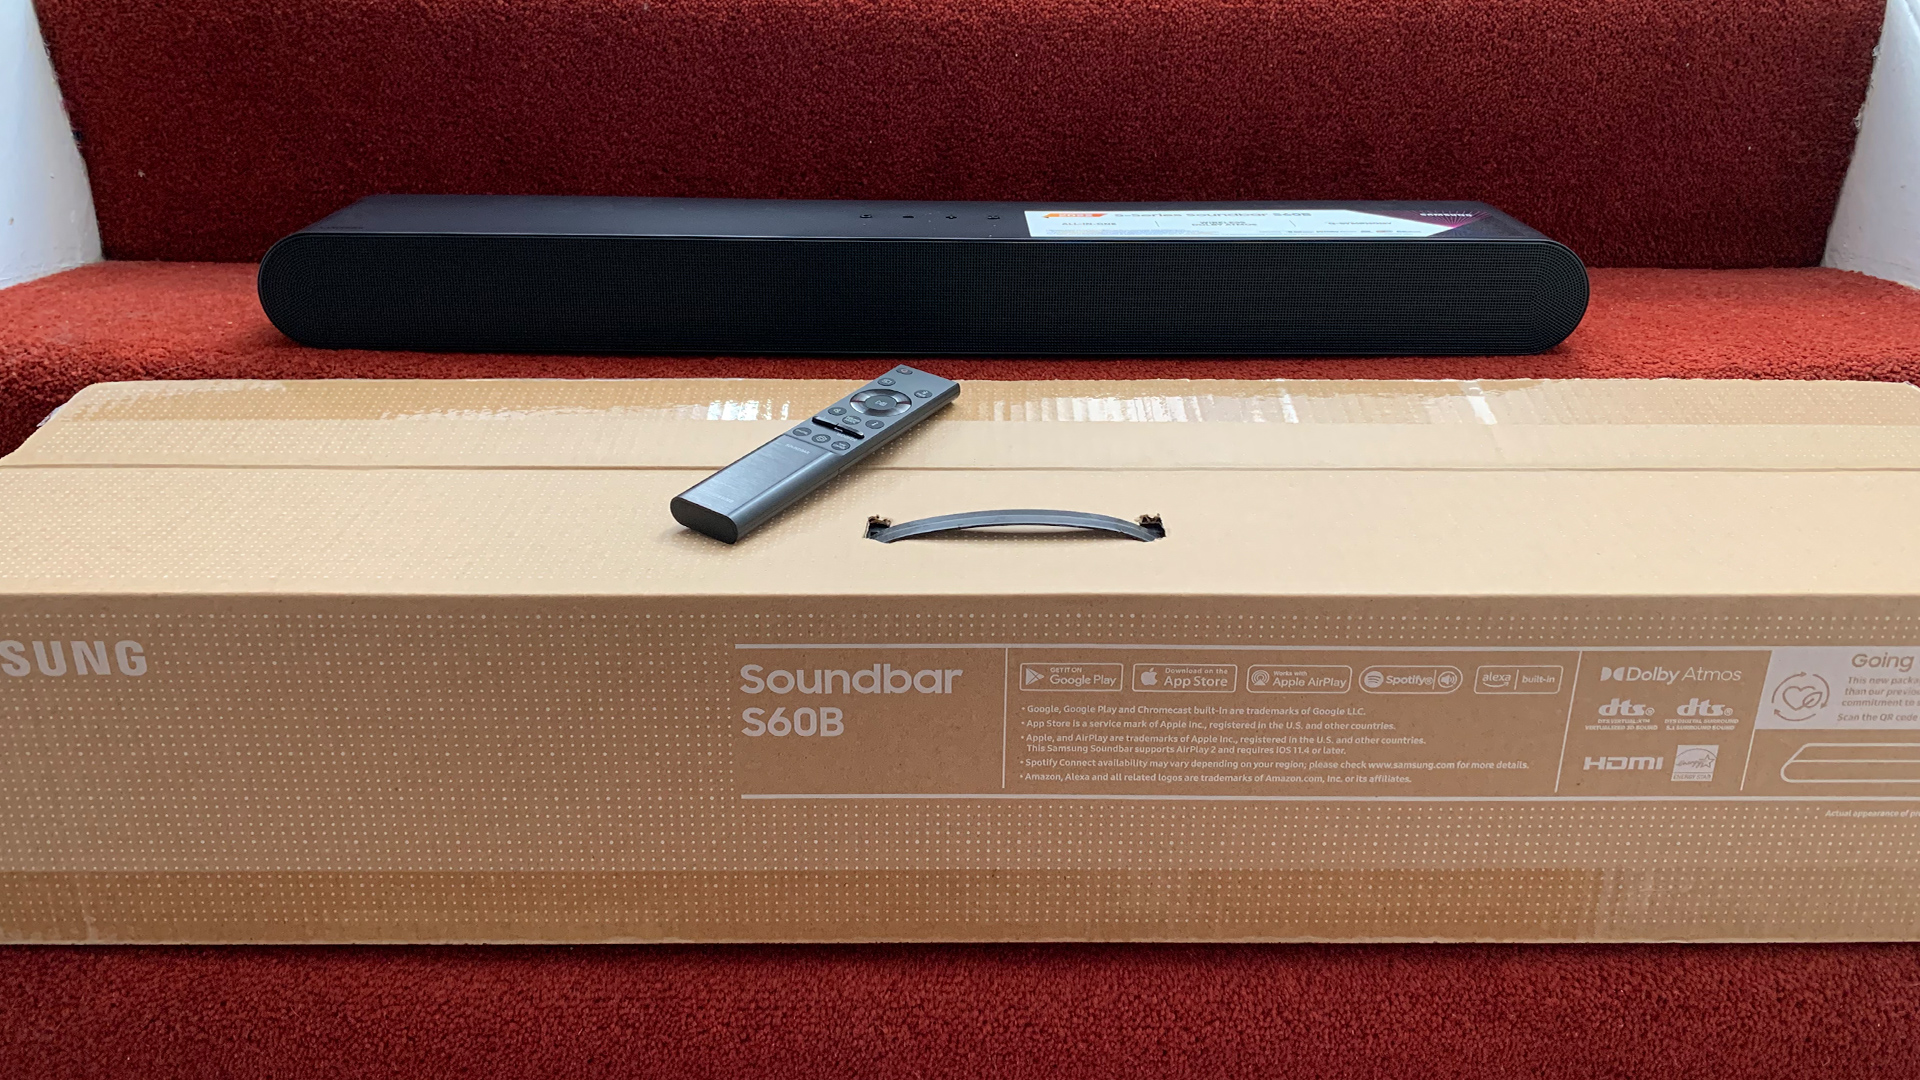 The Samsung S60B soundbar